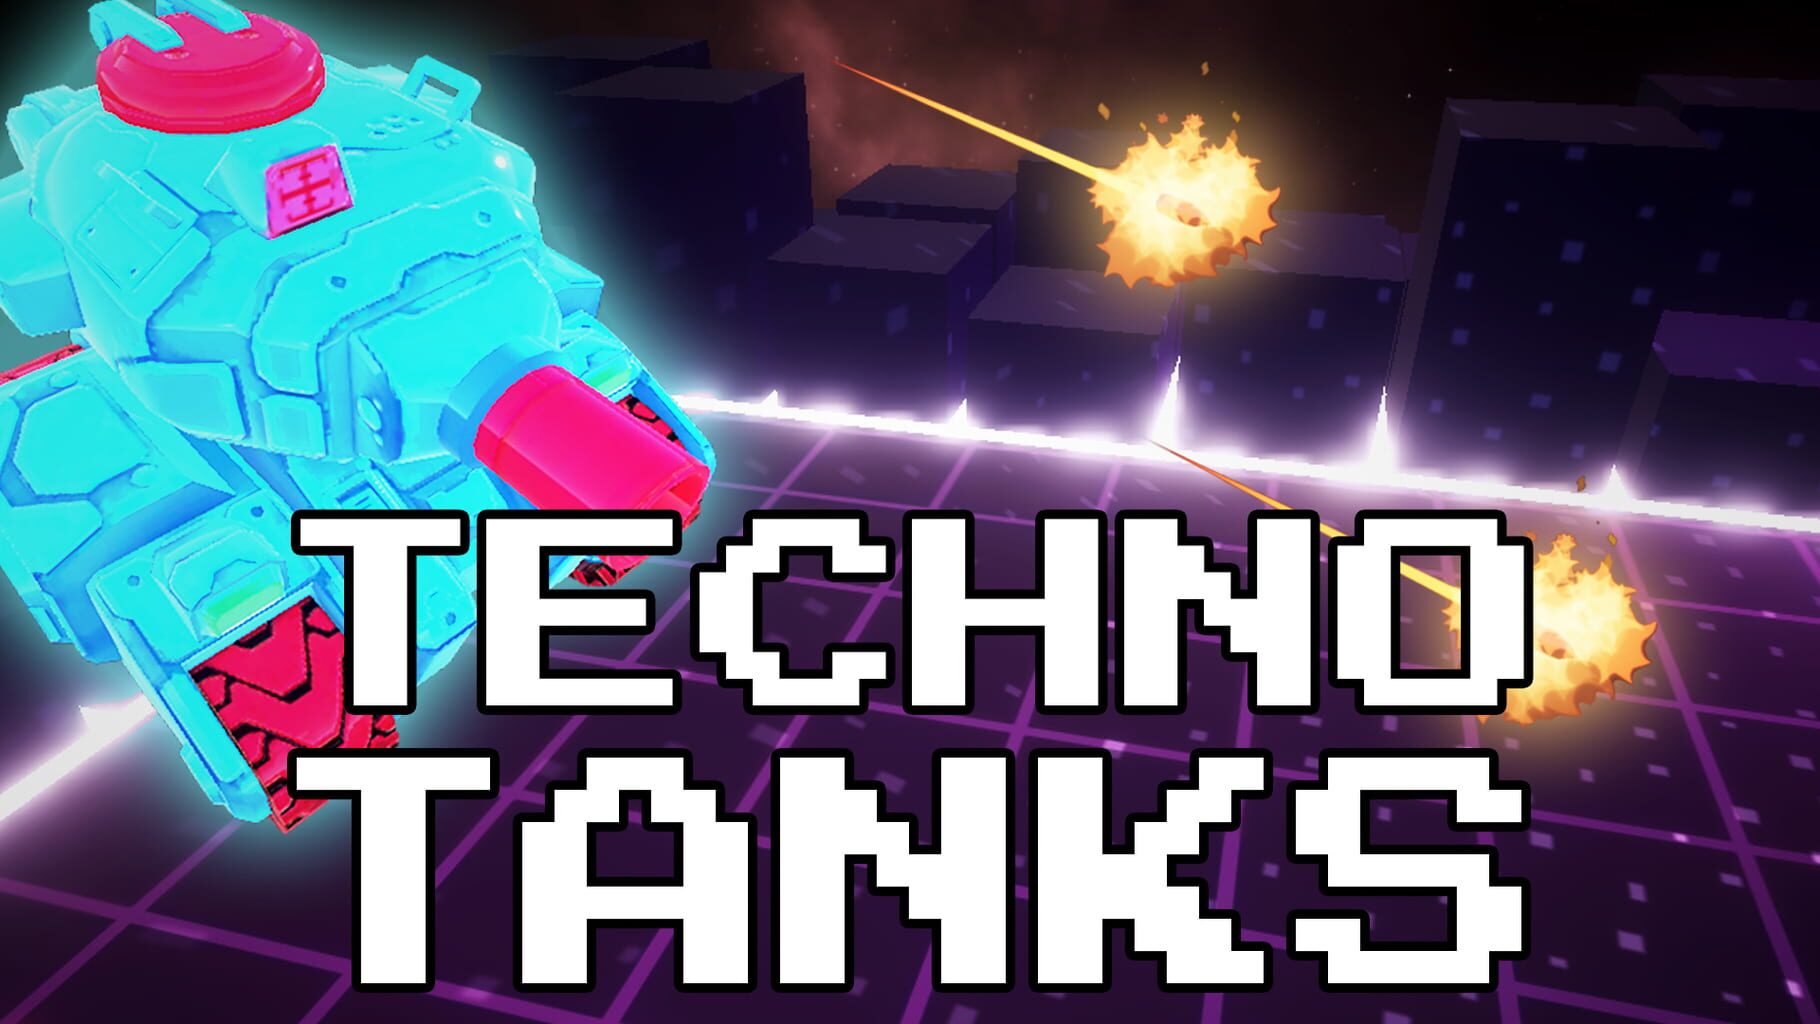 Techno Tanks artwork